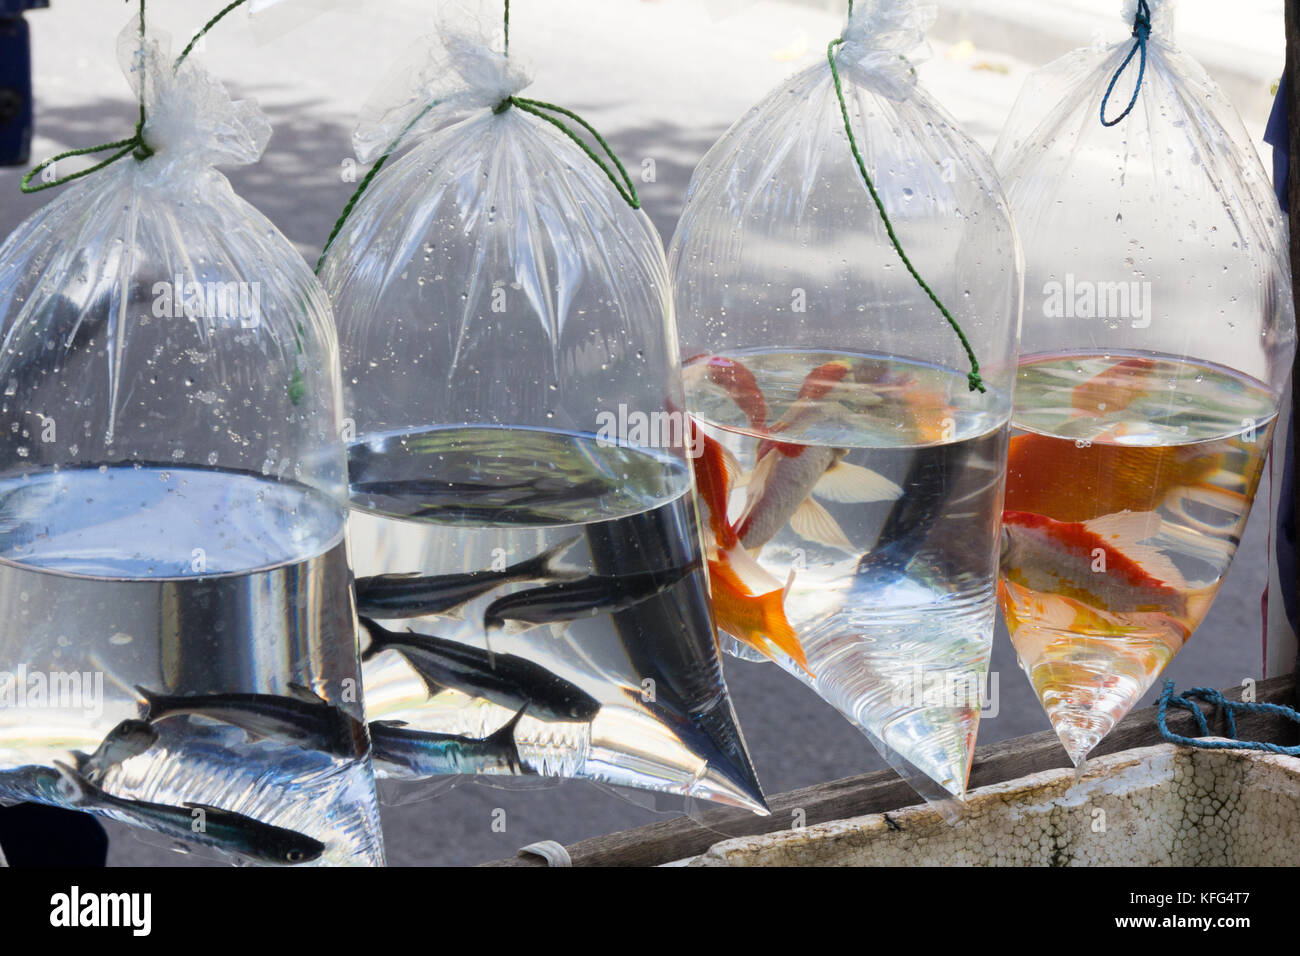 Fish in plastic bags for sale on market, Kuta, Bali, Indonesia Stock Photo